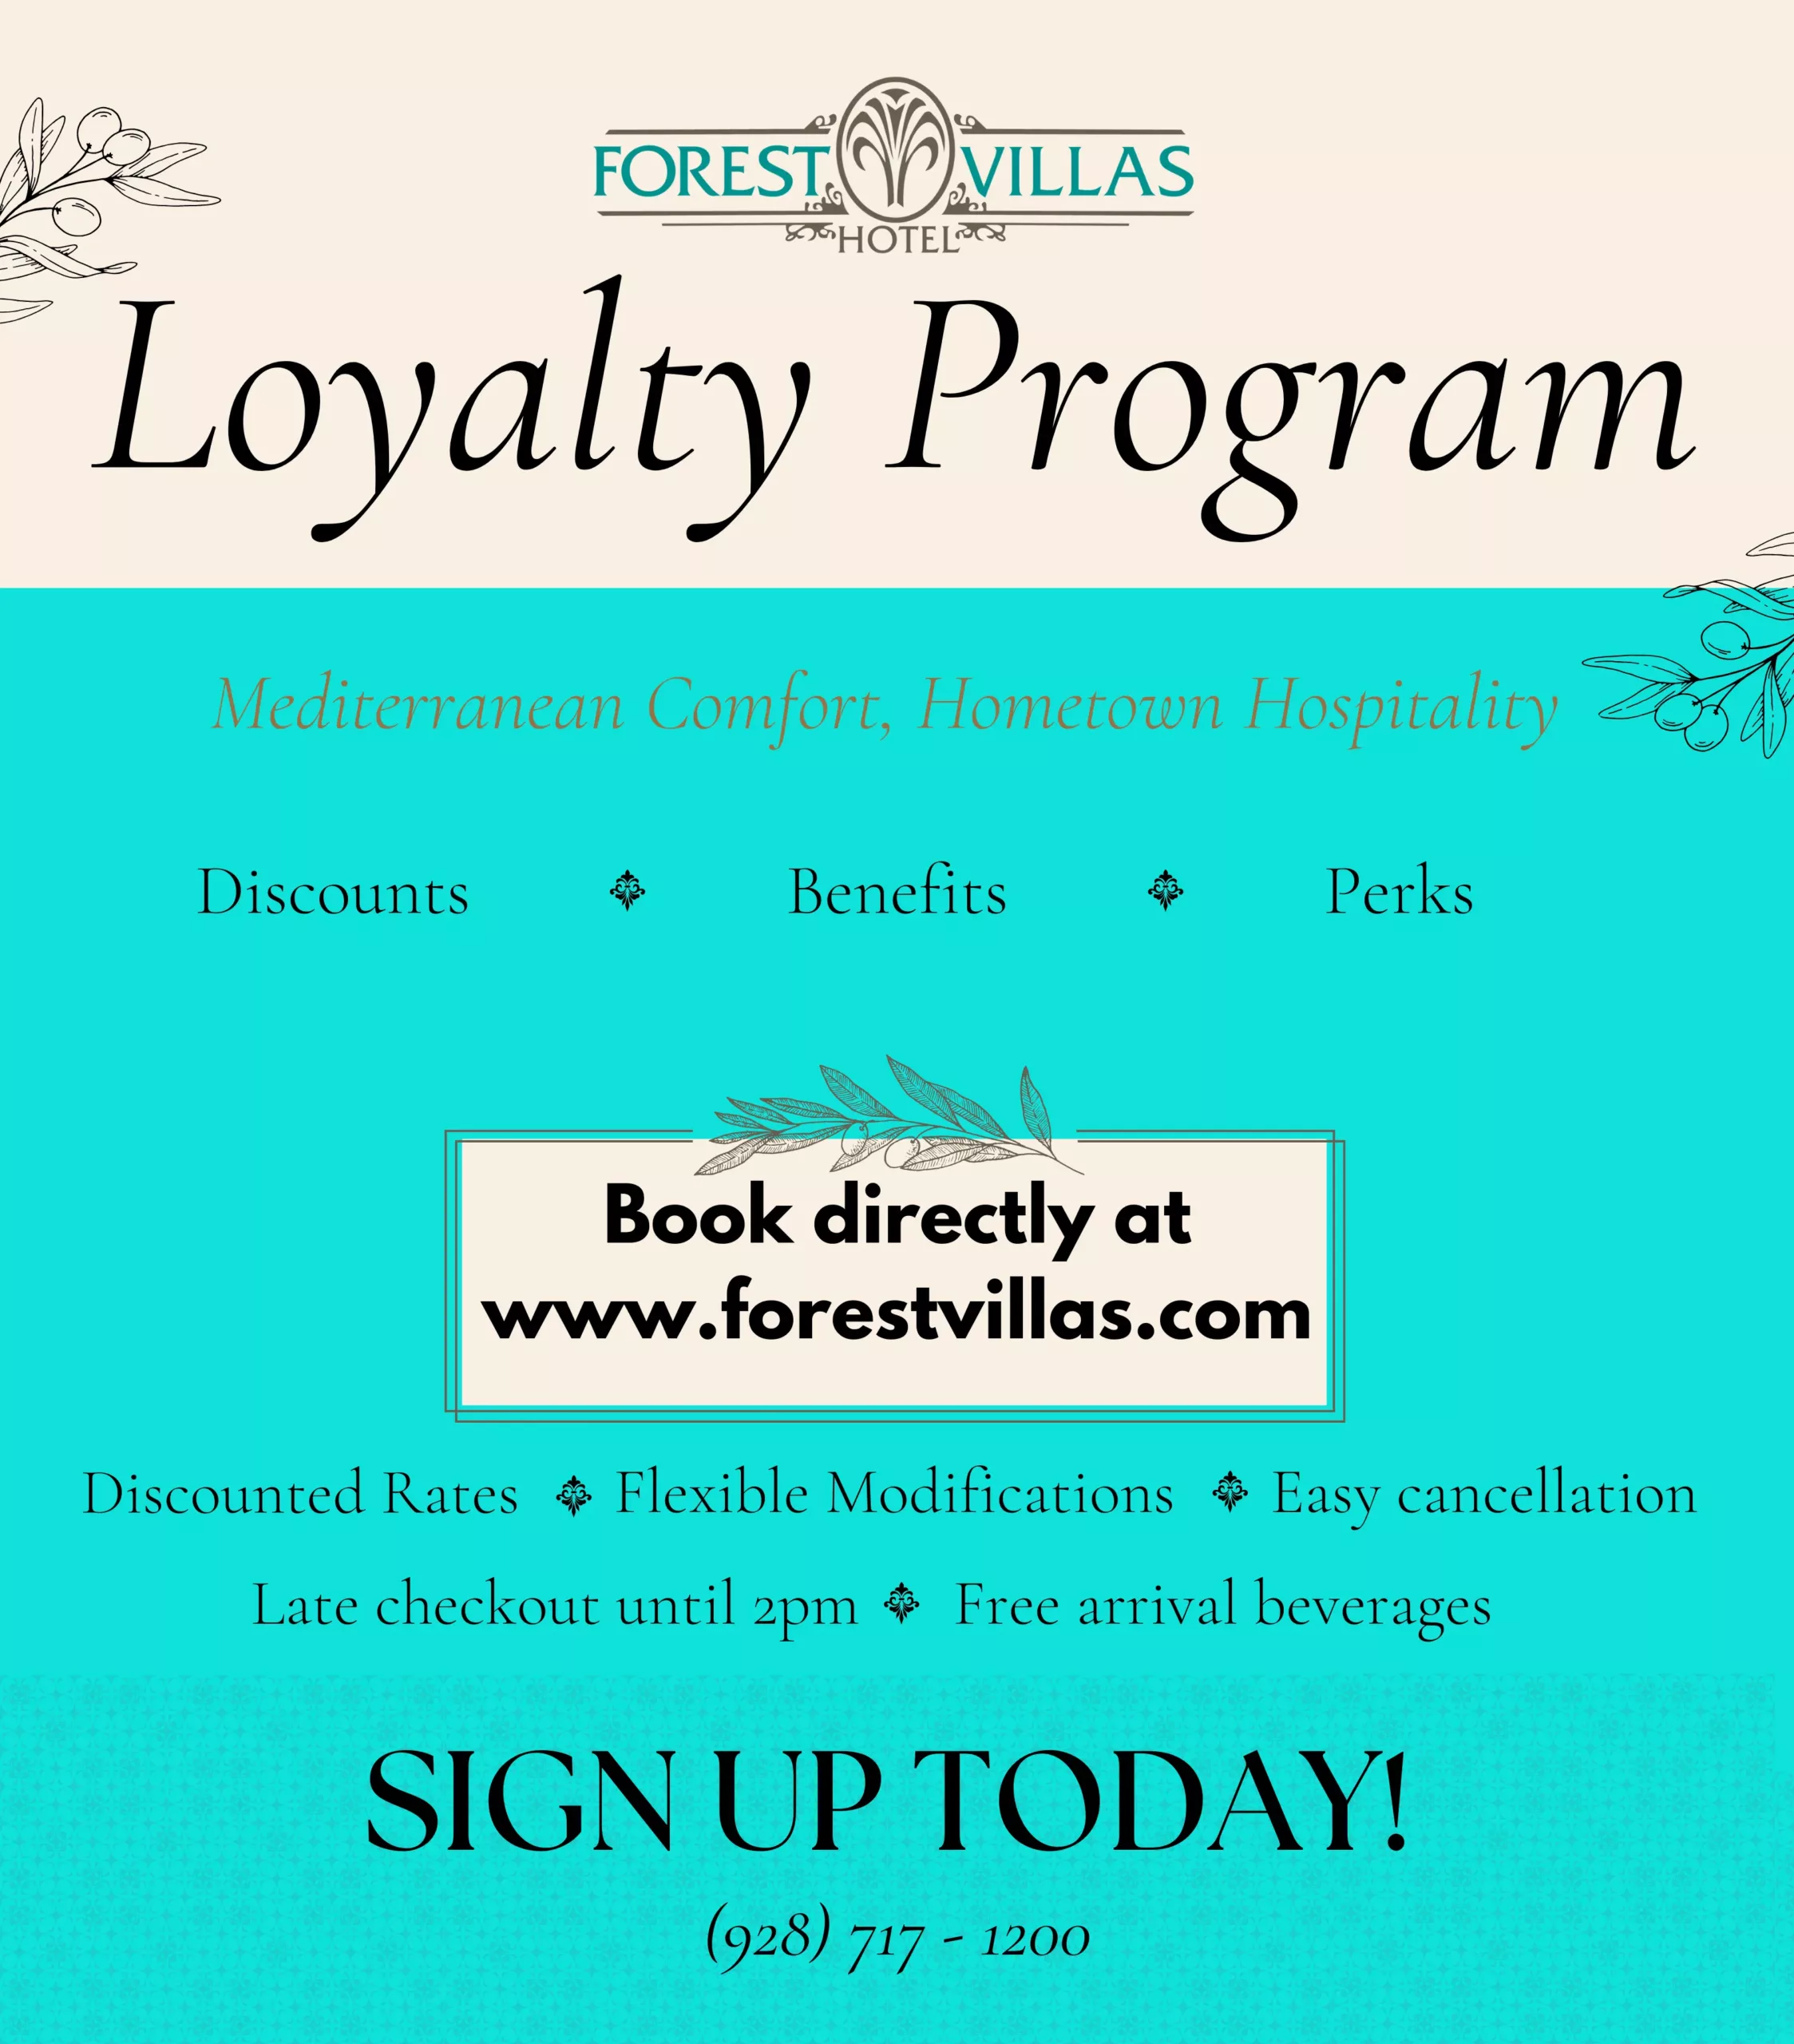 Loyalty Program Card - Forest Villas Hotel in Prescott